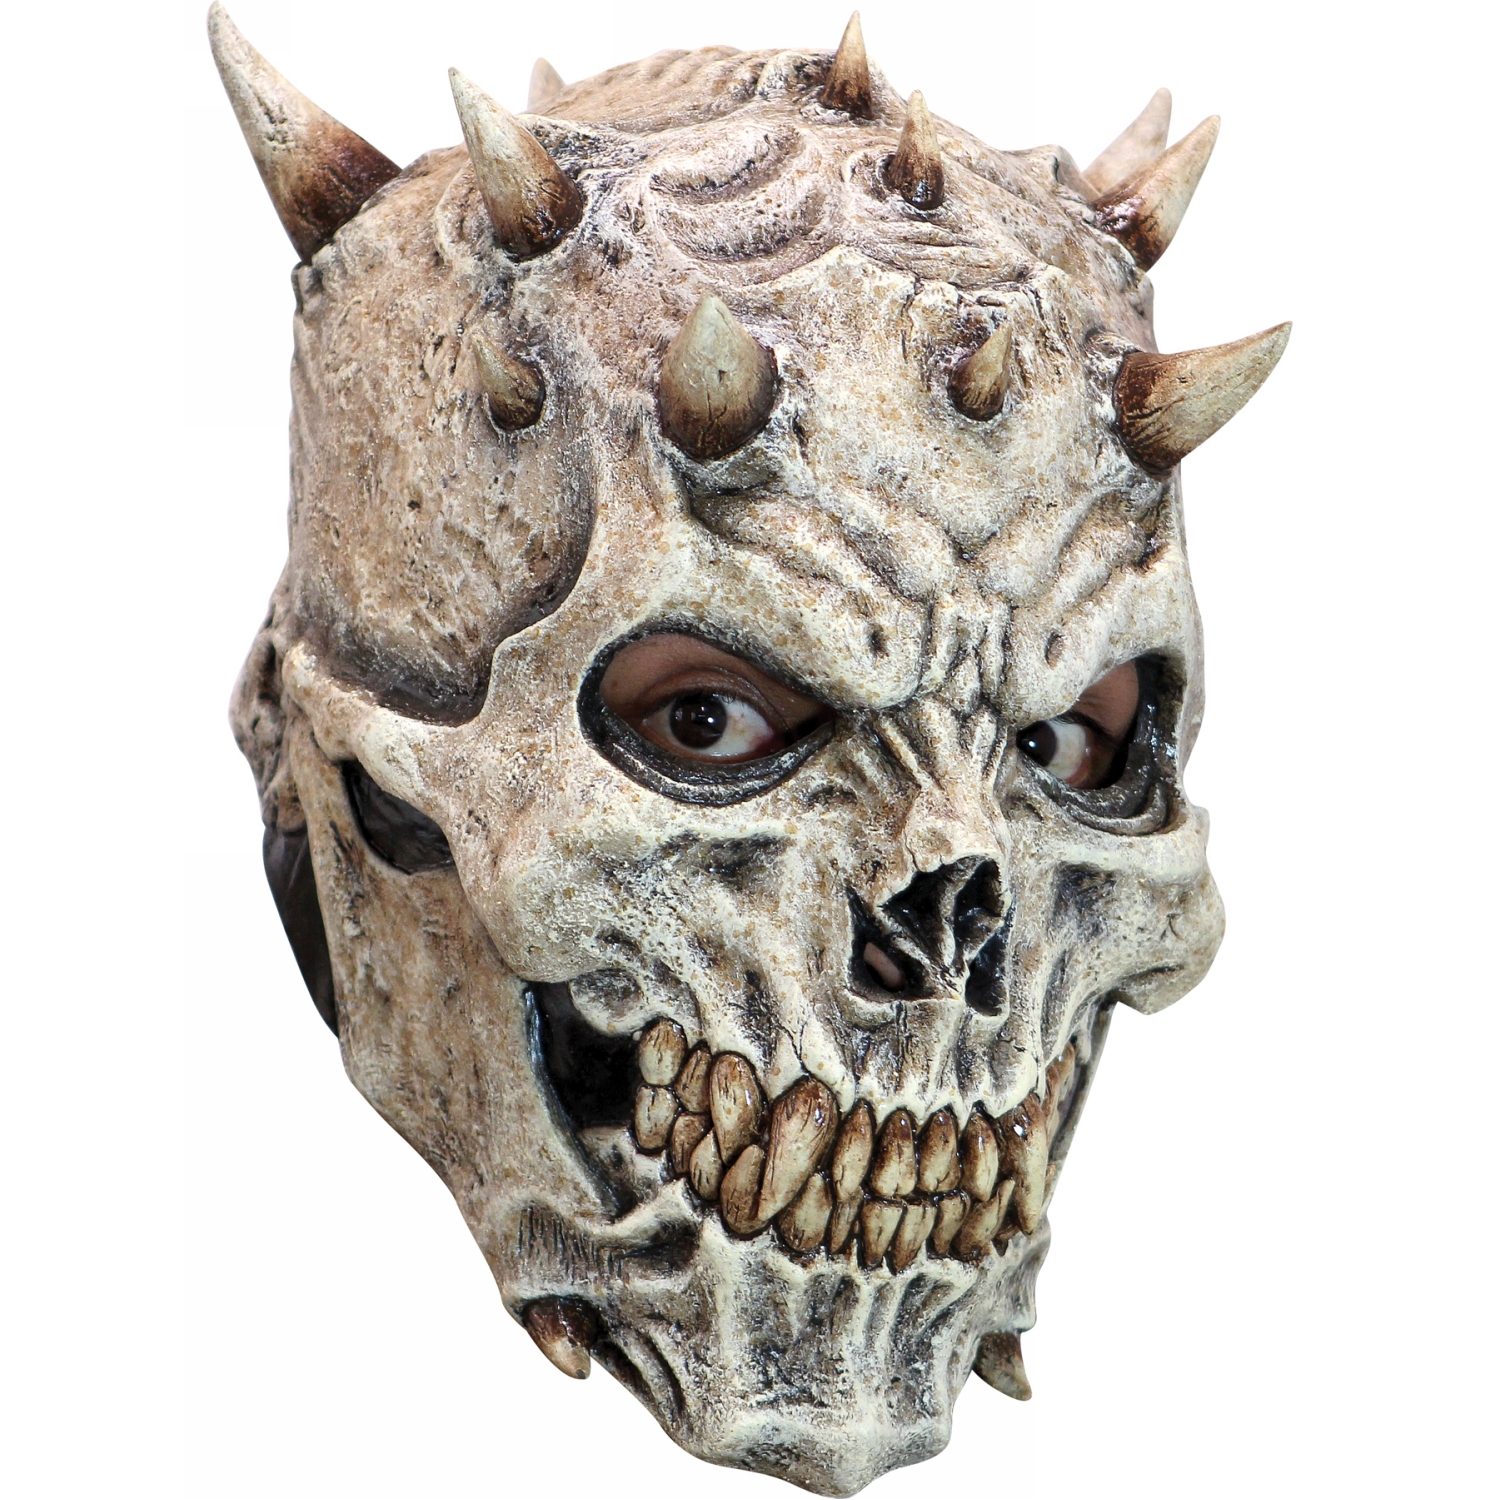 Spikes Mask in Masks | NightmareFactory.com